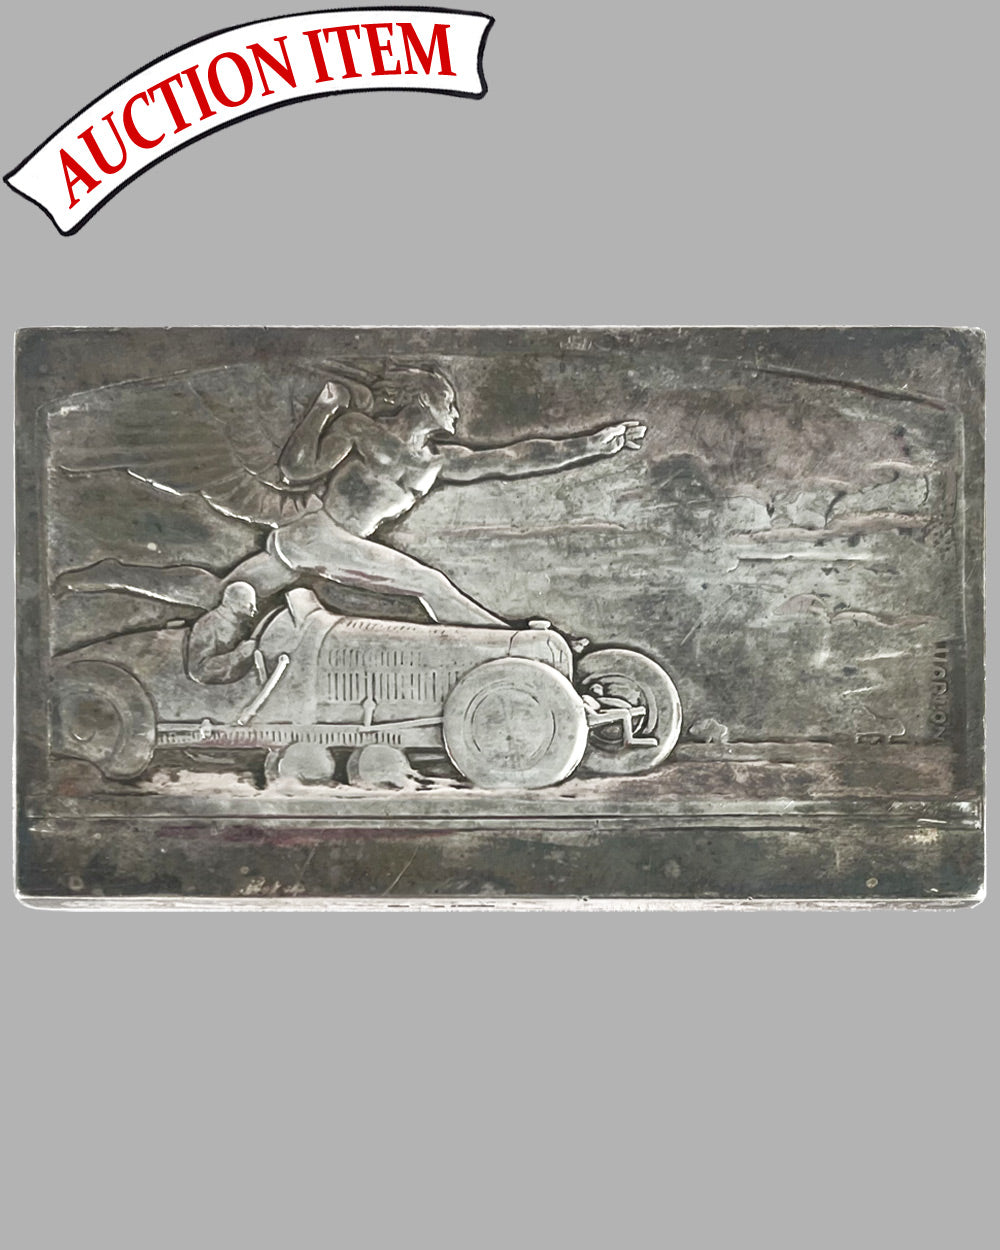 8 - Stirling silver plaque by Morlon